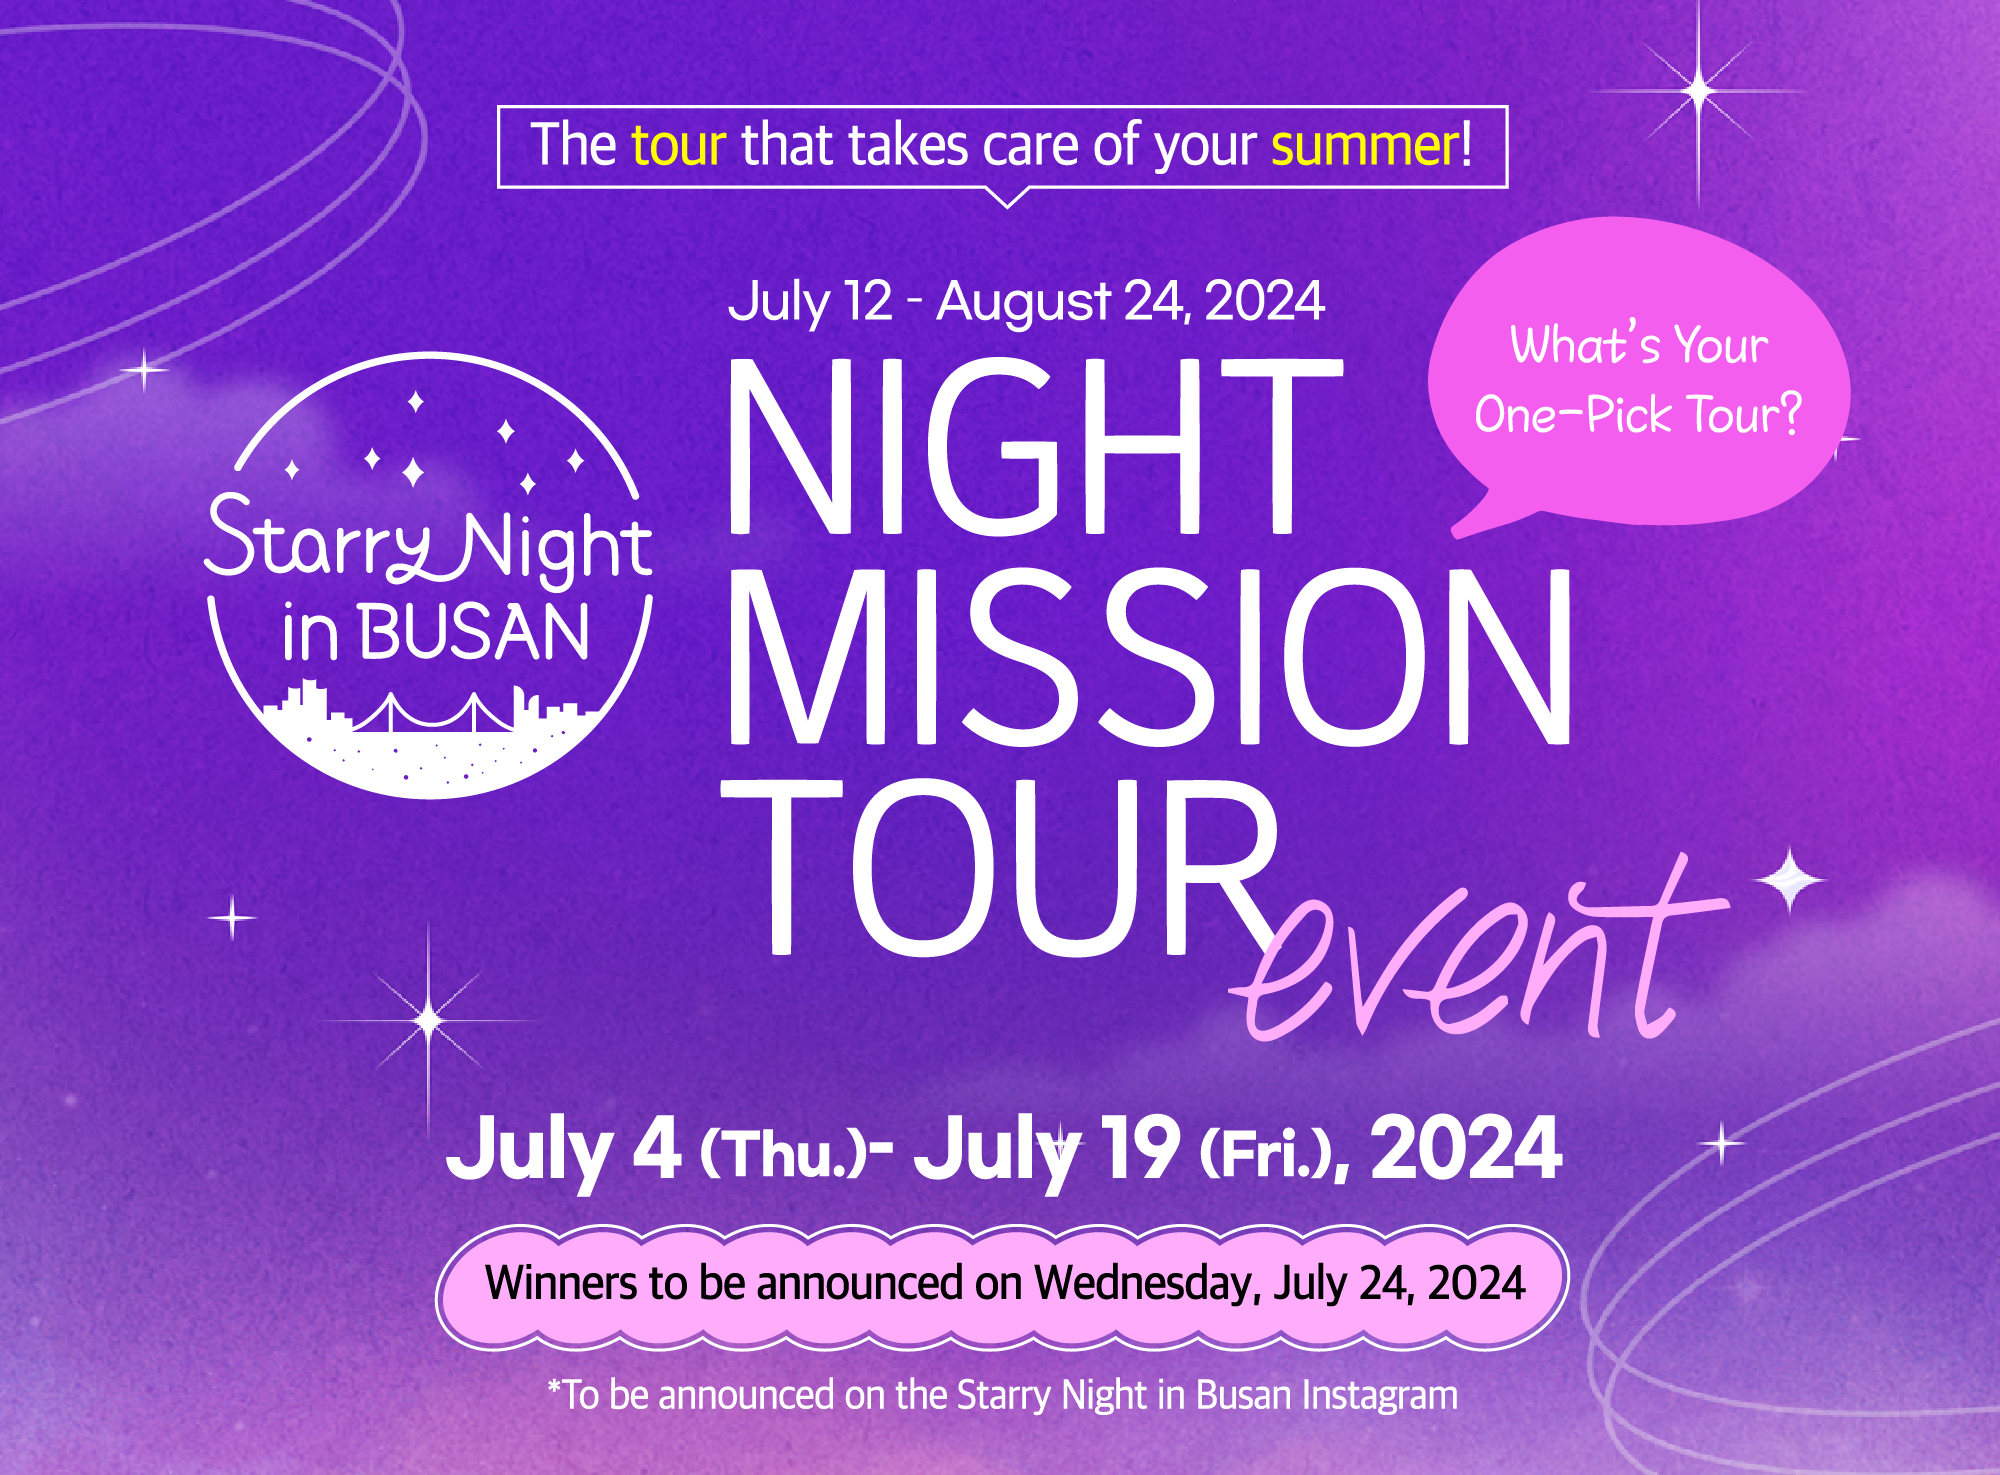 NIGHT MISSION TOUR EVENT!